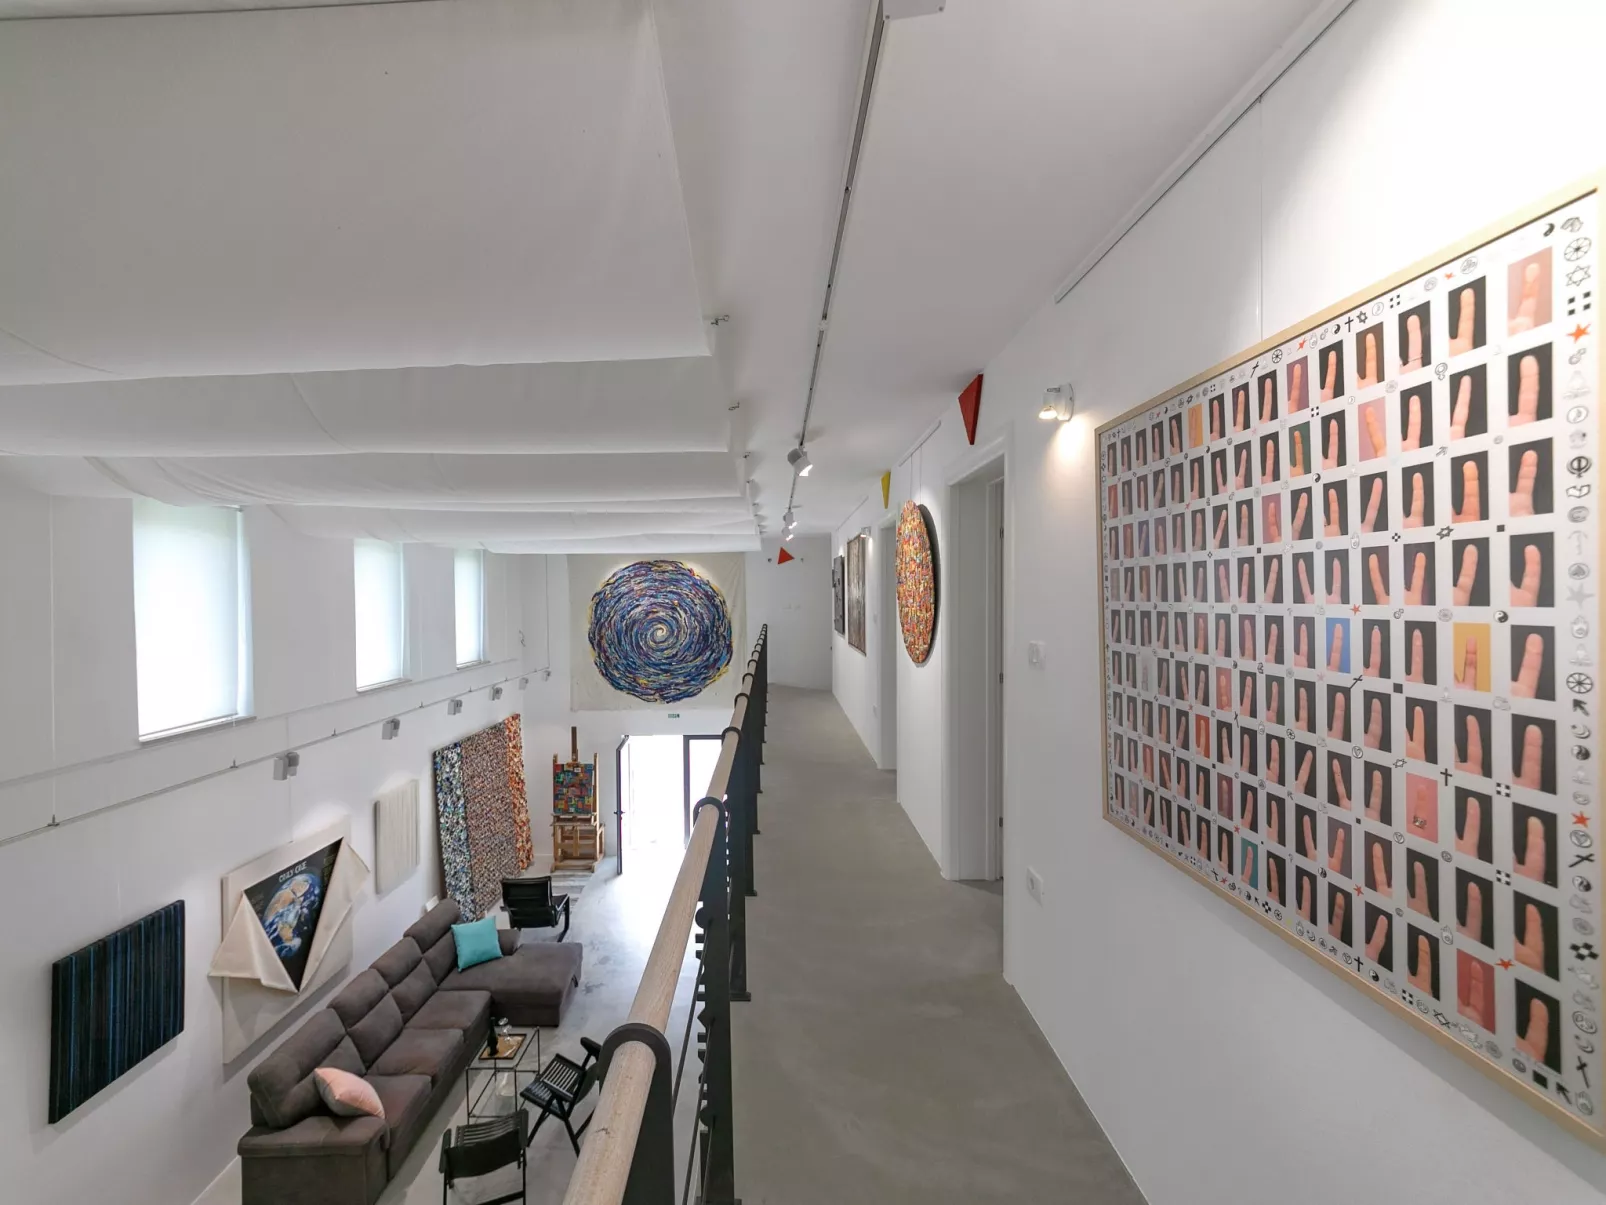 Studio Gallery Bura-Binnen